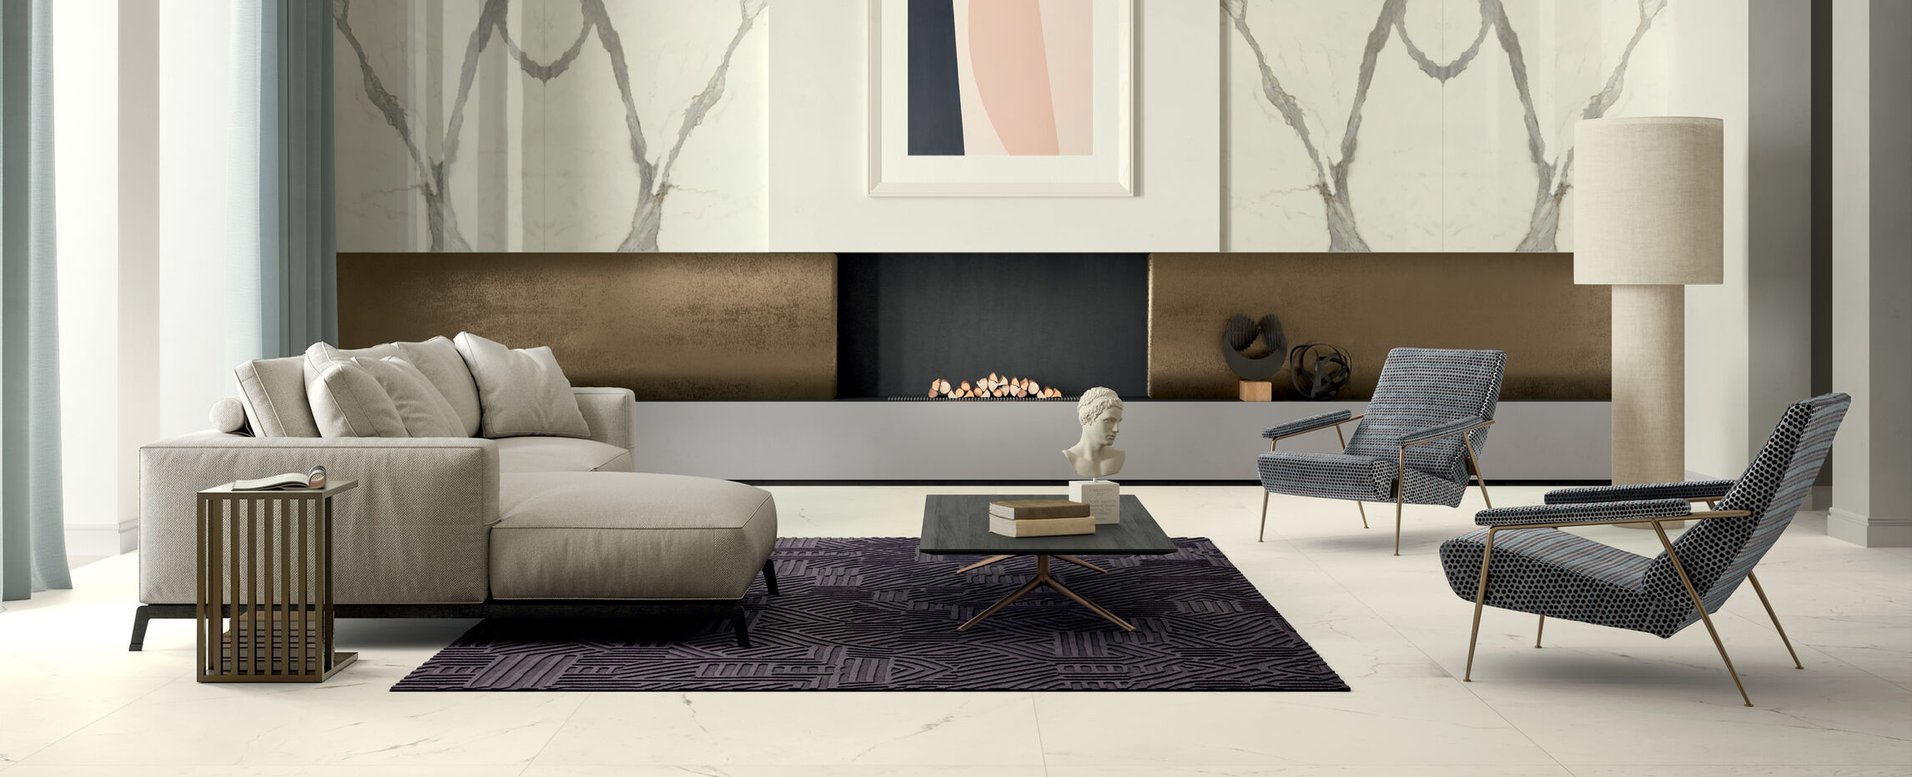 Buxy, Corail Blanc & designer furniture